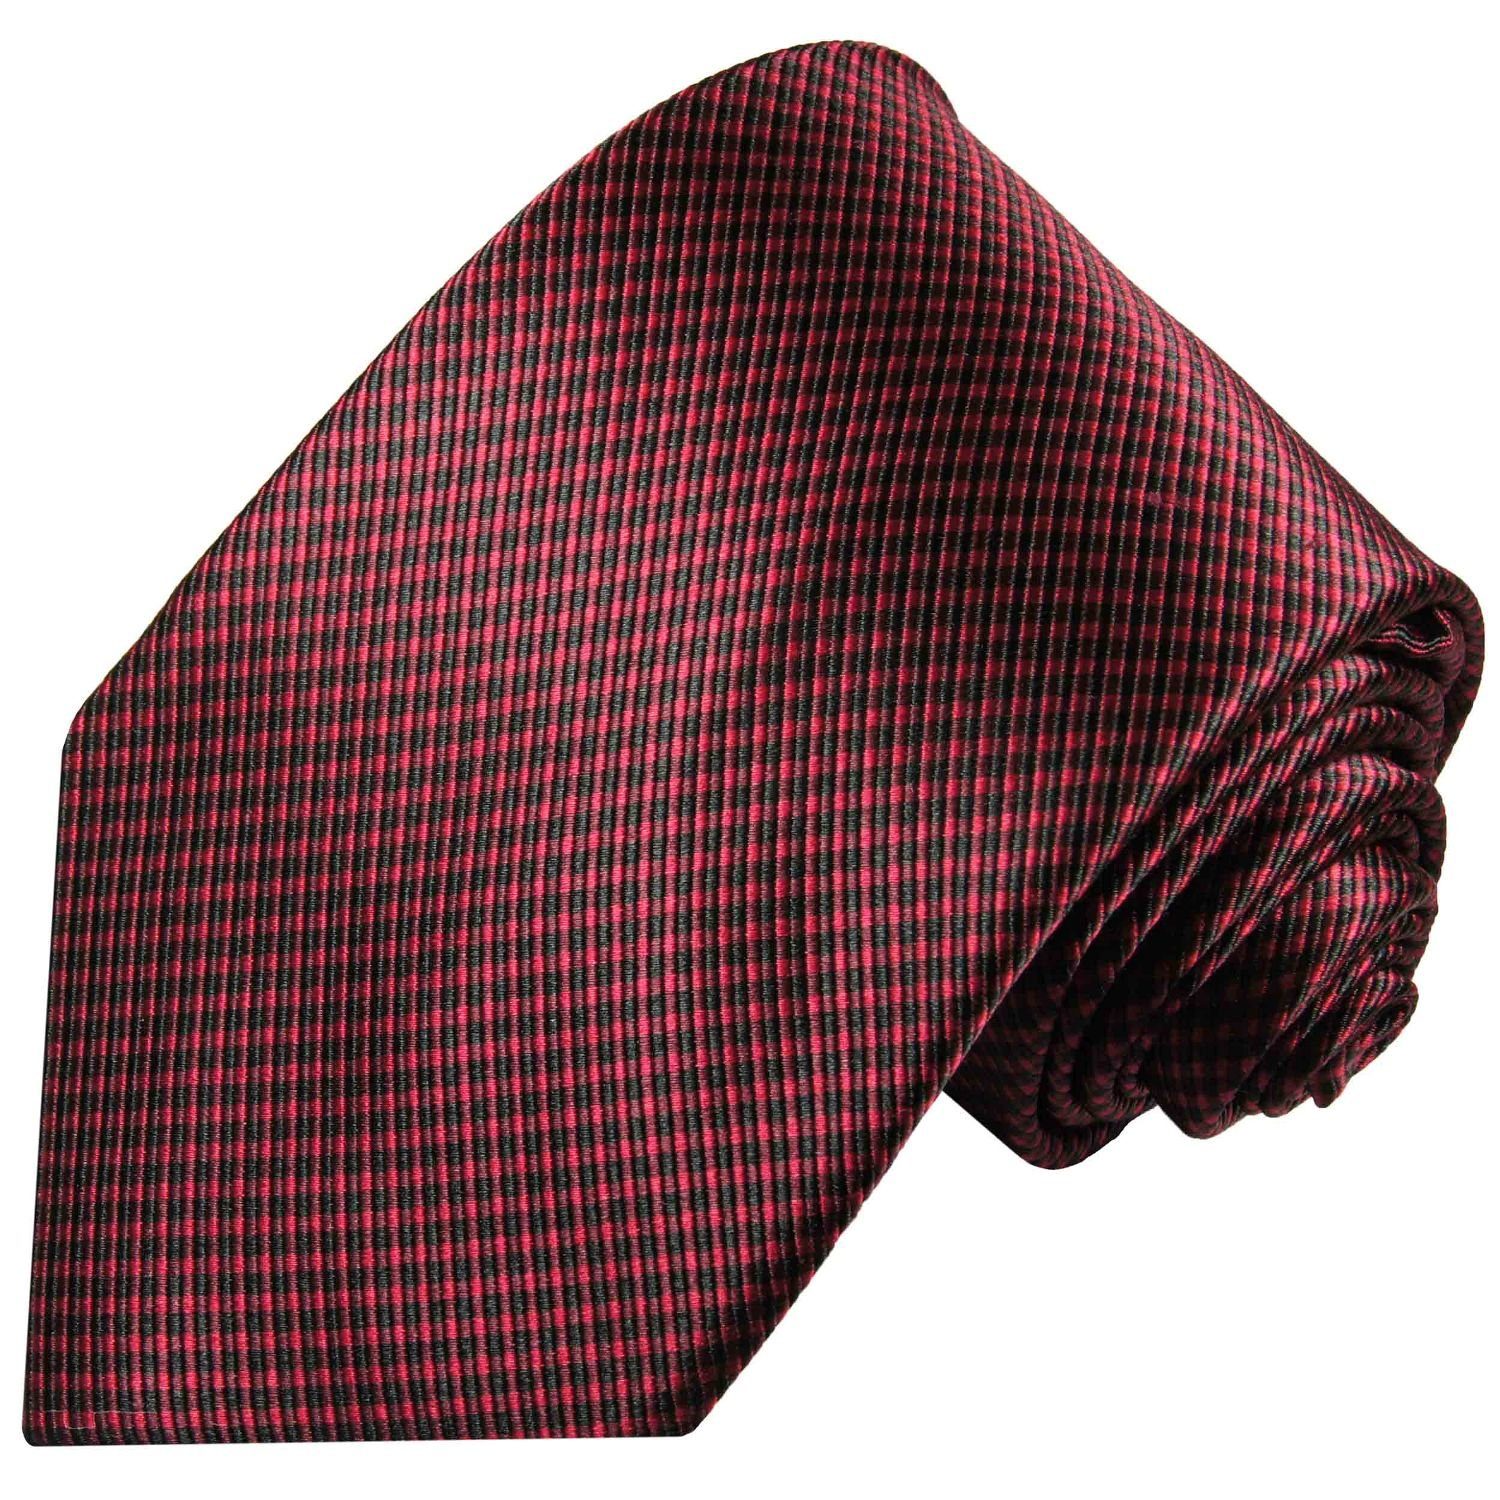 Paul Malone Krawatte Designer Seidenkrawatte Herren Schlips modern kariert 100% Seide Breit (8cm), Extra lang (165cm), rot schwarz 450 | Breite Krawatten